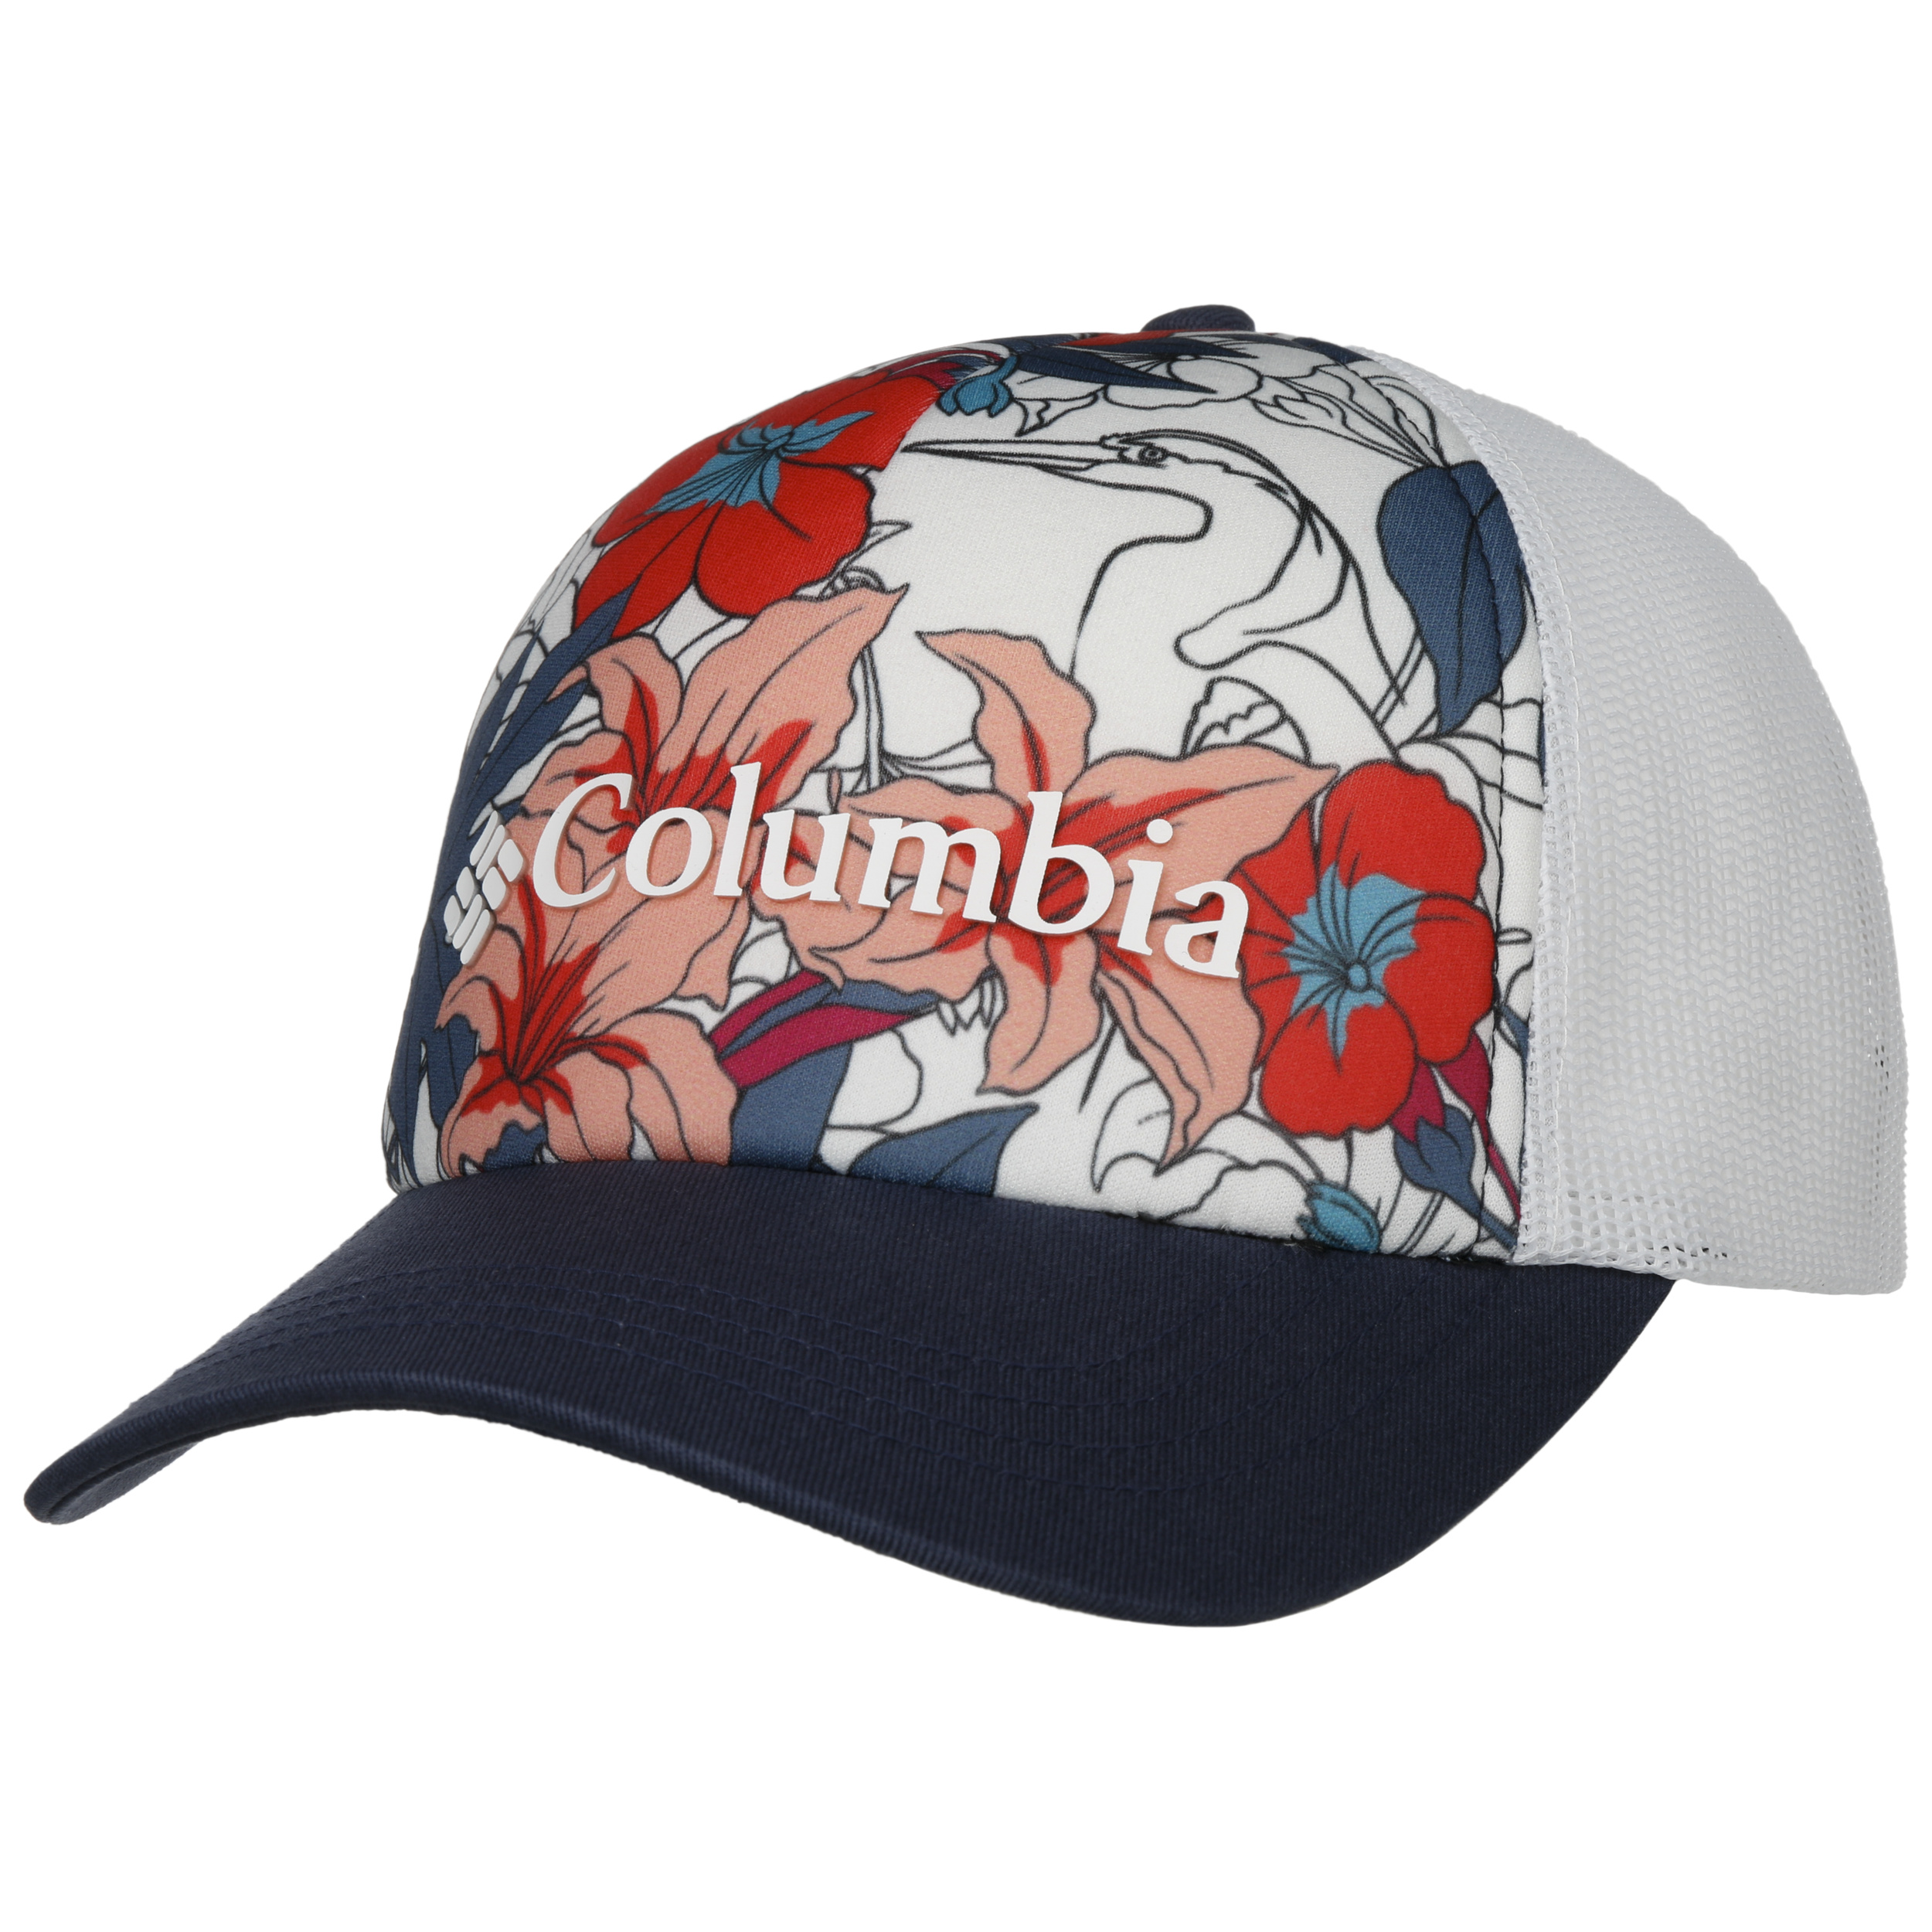 Blue Mesh Cap by Columbia - 28,95 €